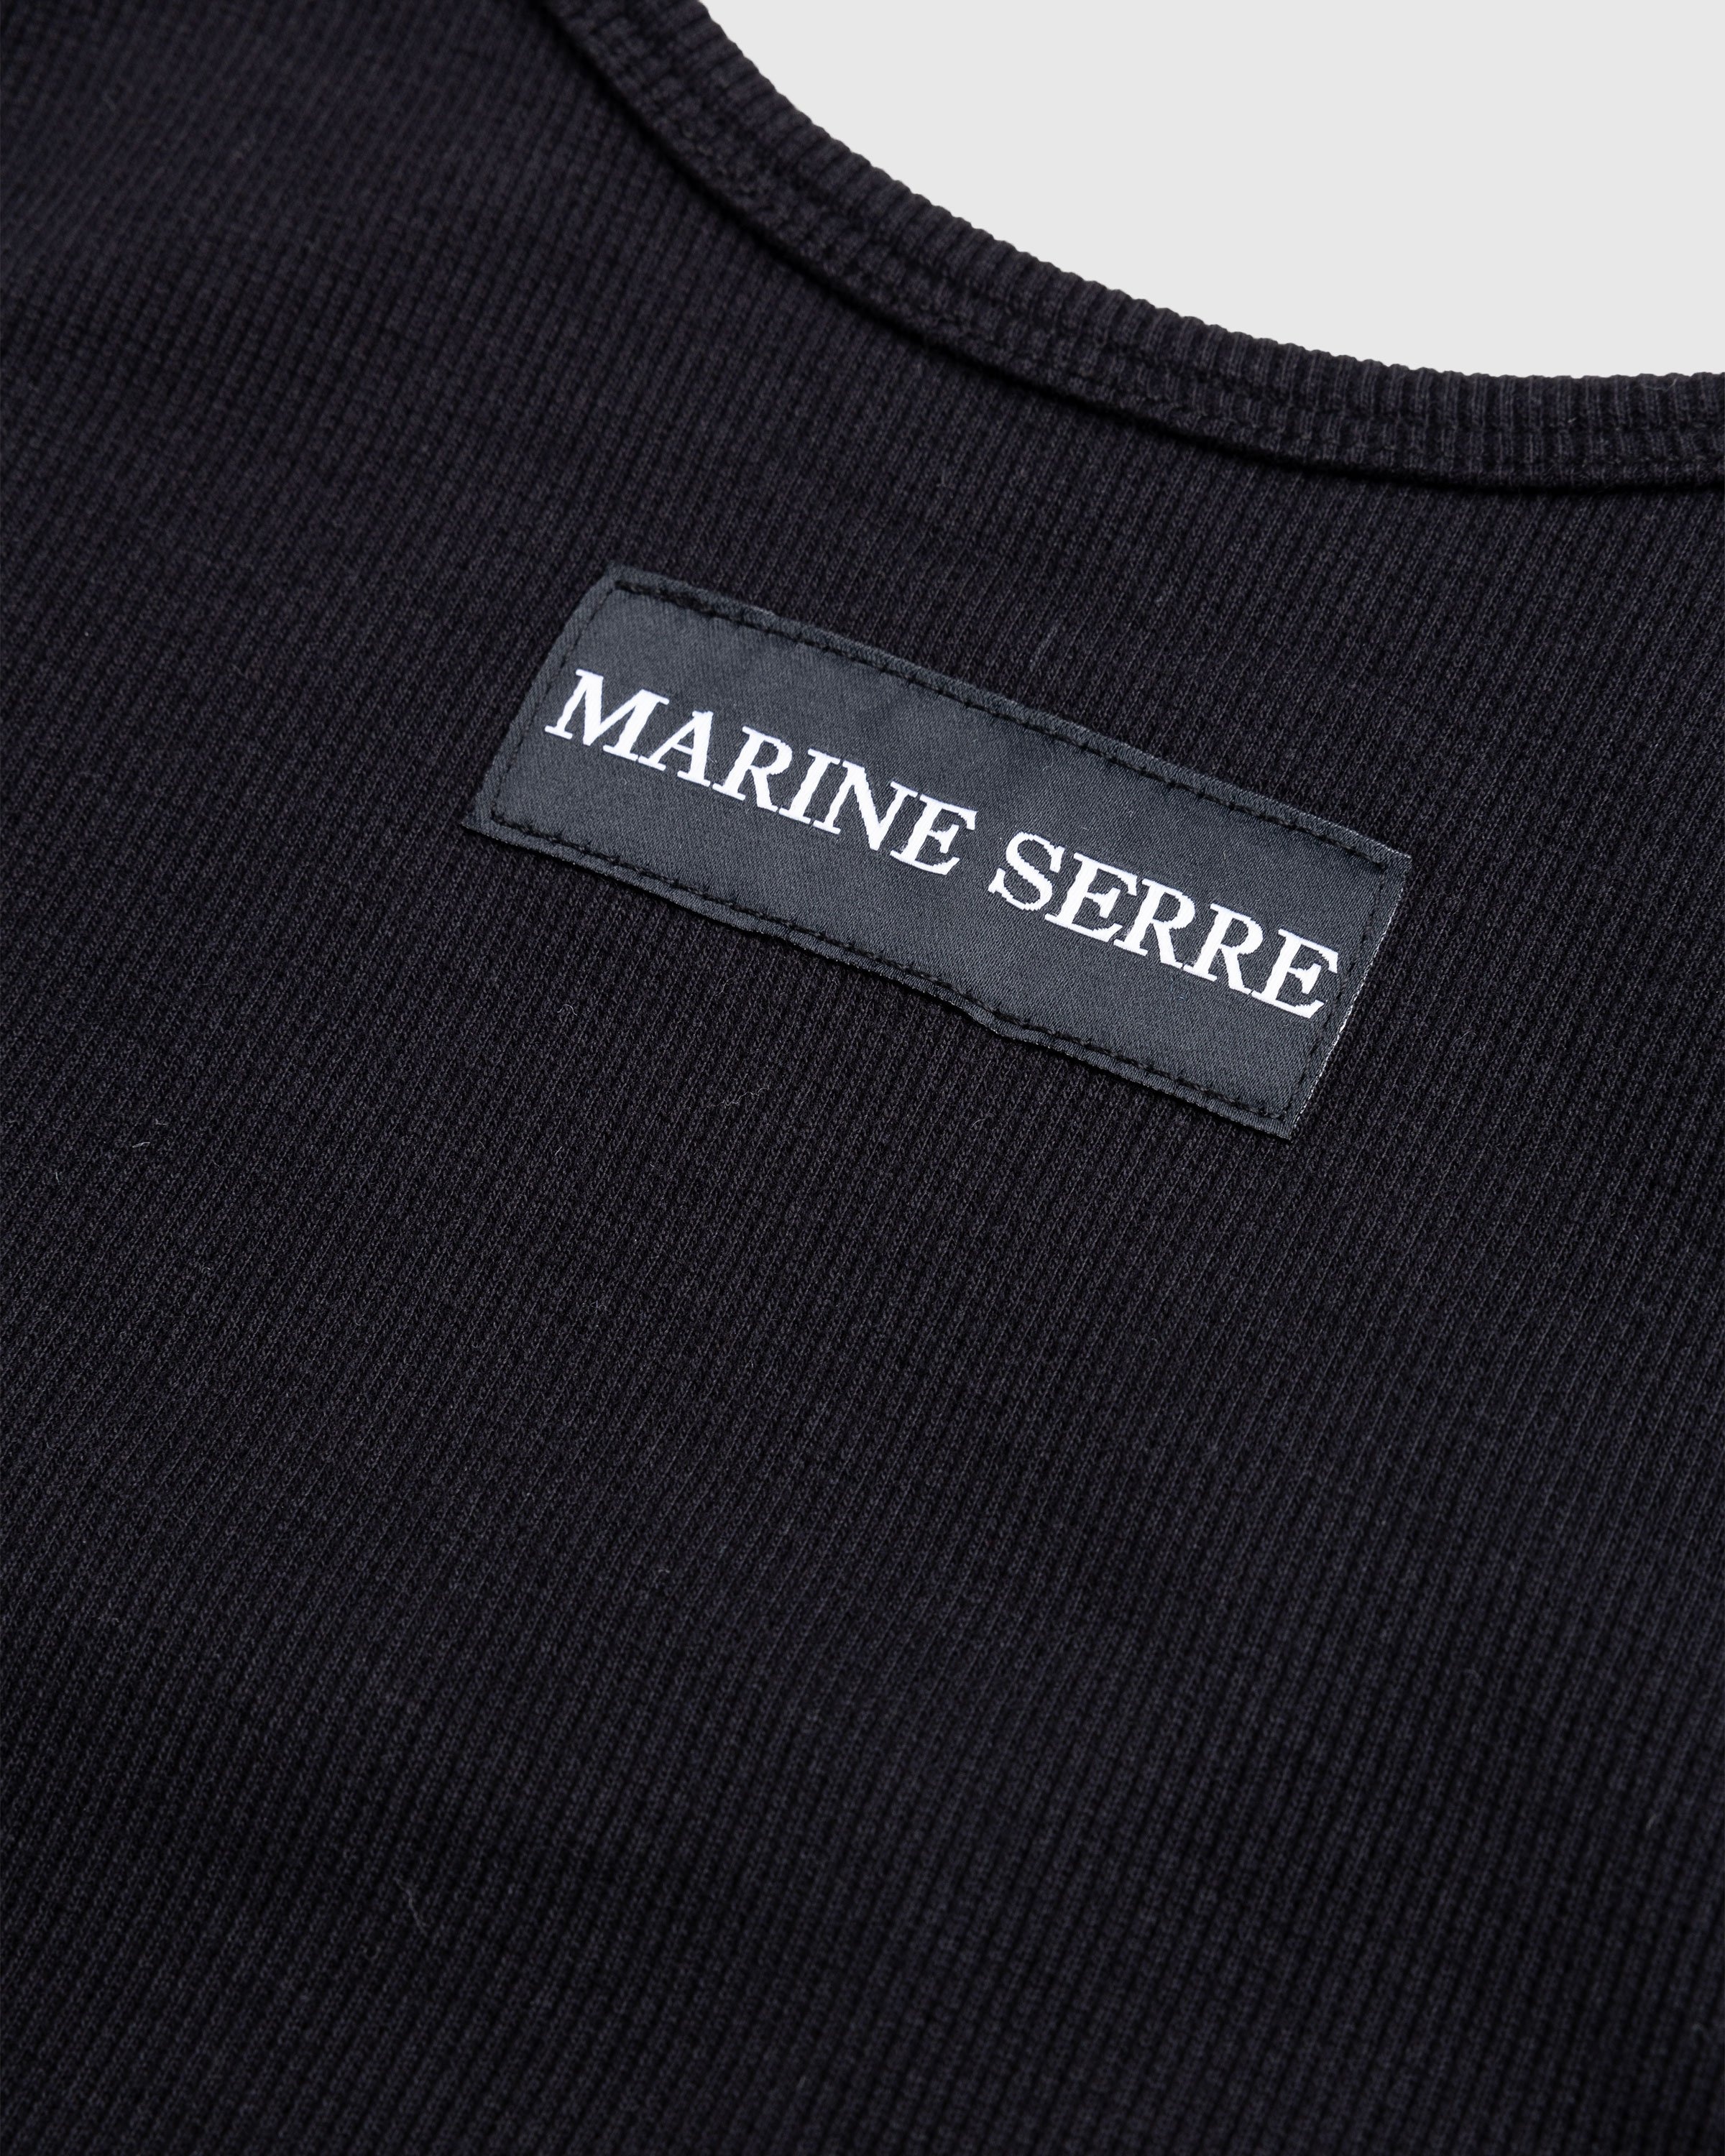 Marine Serre – Organic Cotton Fitted Tank Top Black - Tops - Black - Image 5